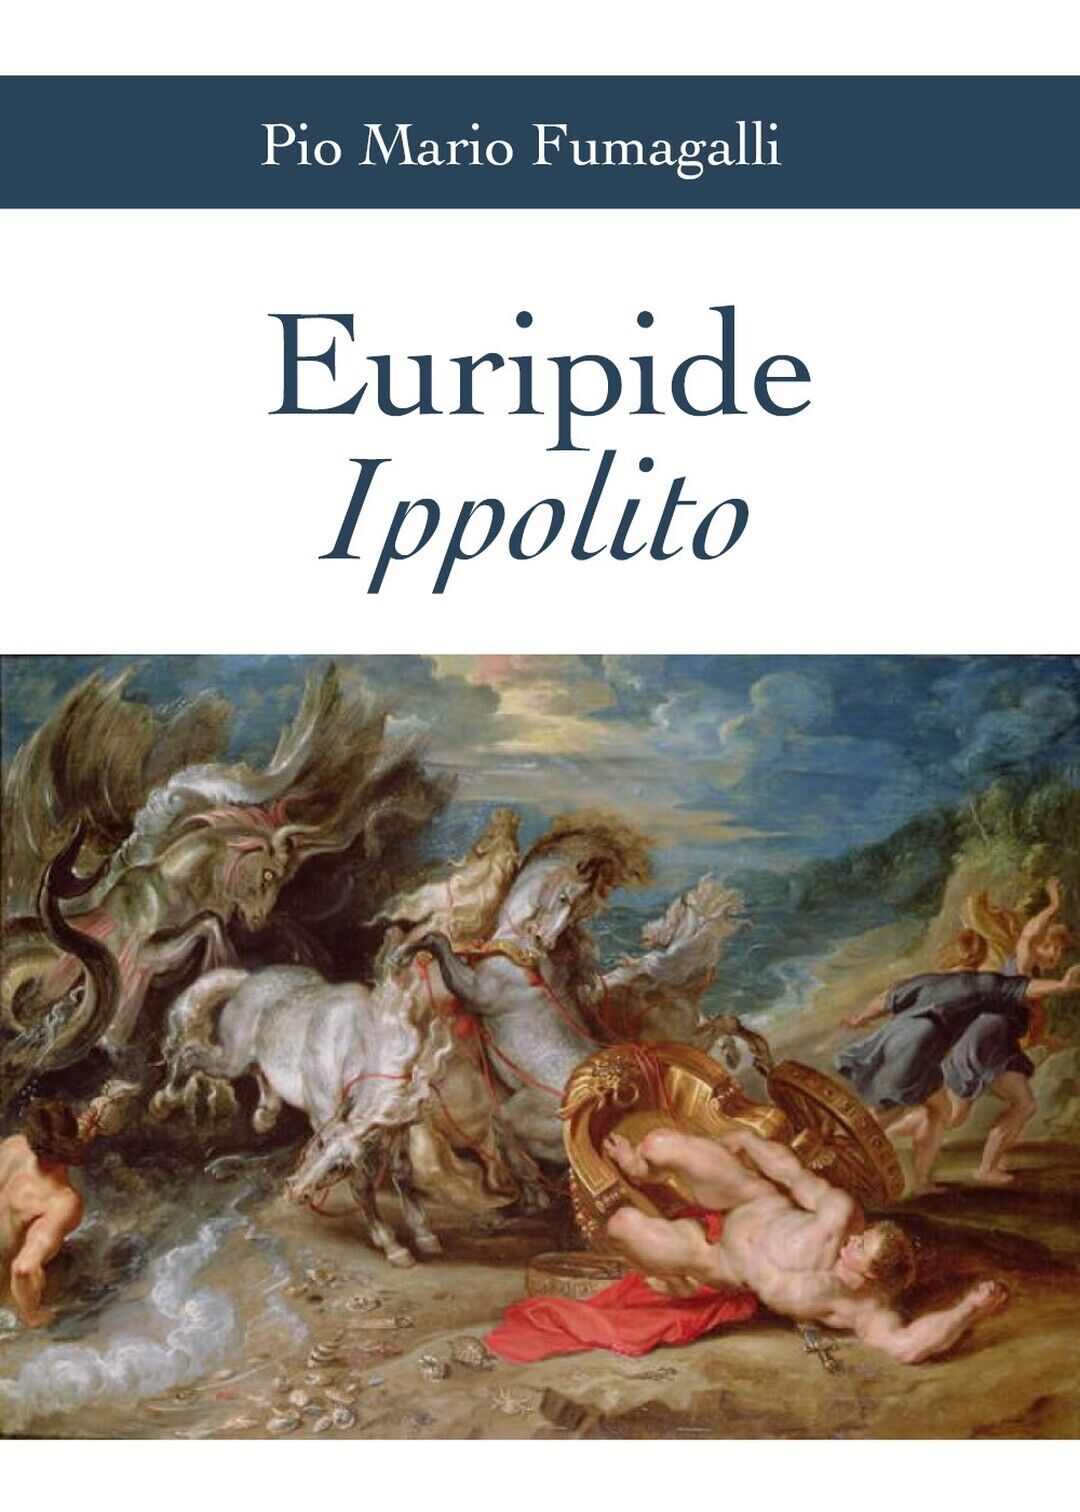 Euripide Ippolito,  di Euripide, P. M. Fumagalli,  2019,  Youcanprint libro usato